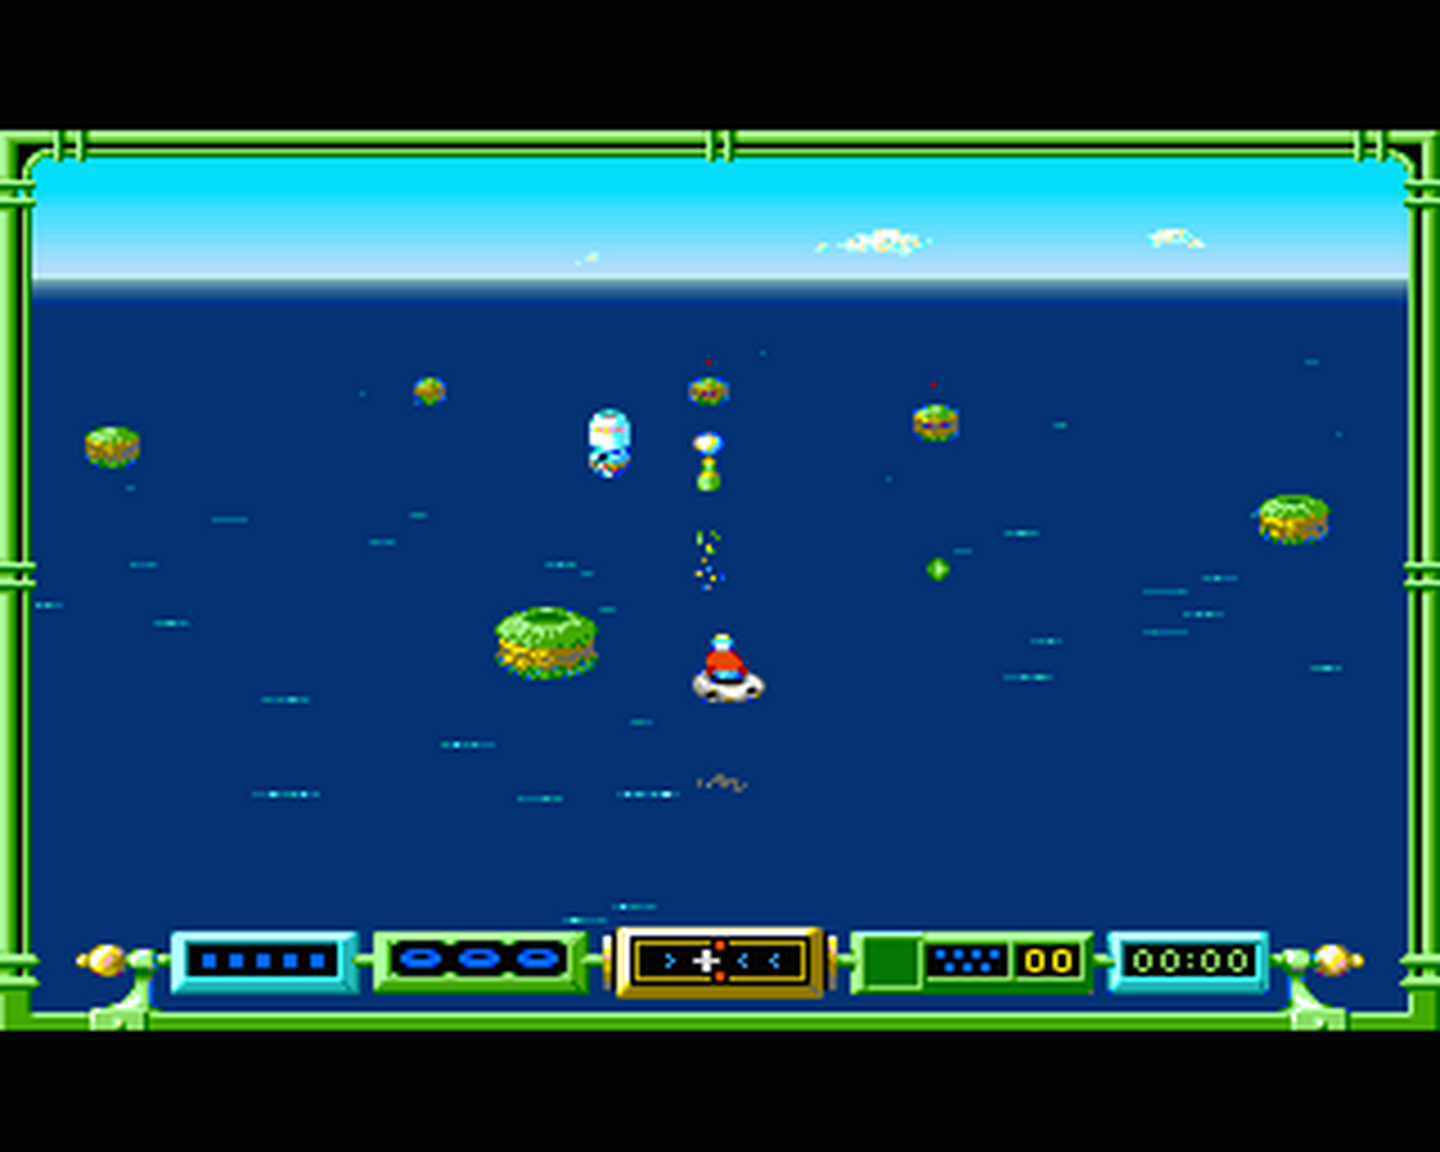 Amiga GameBase Typhoon_Thompson_in_Search_for_the_Sea_Child Broderbund_-_Domark 1990